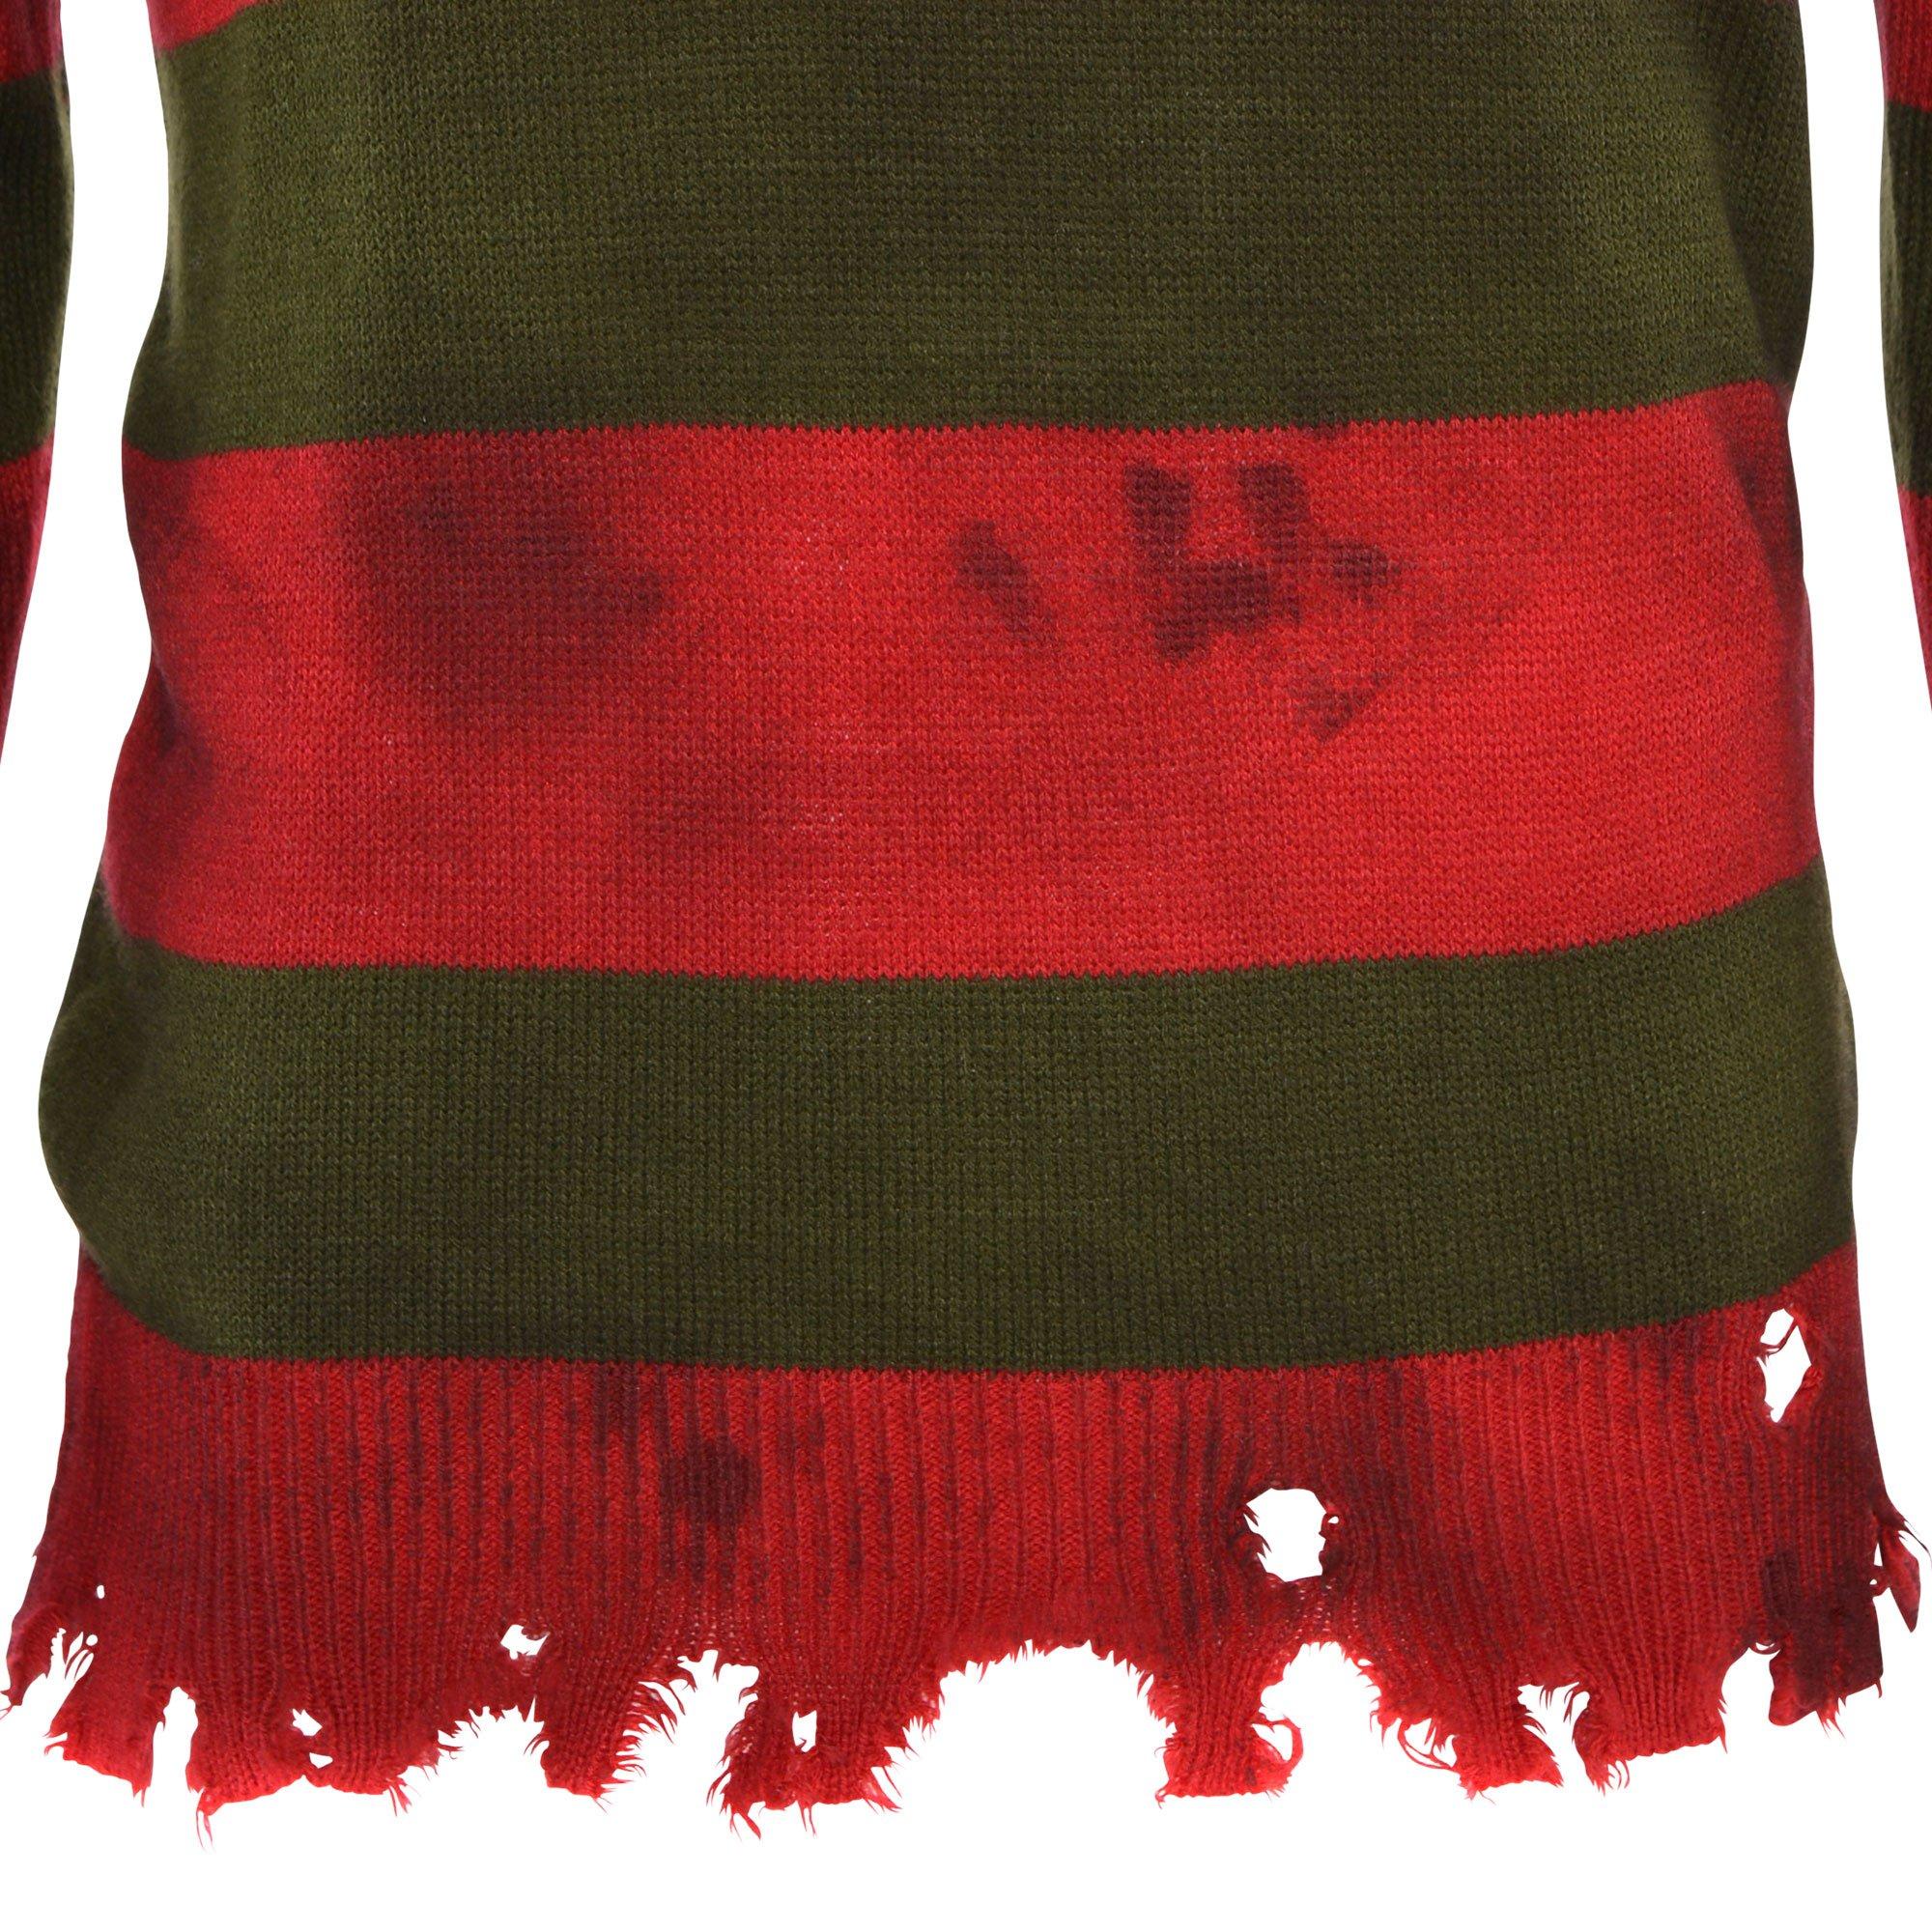 Adult Freddy Krueger Sweater Deluxe - A Nightmare on Elm Street